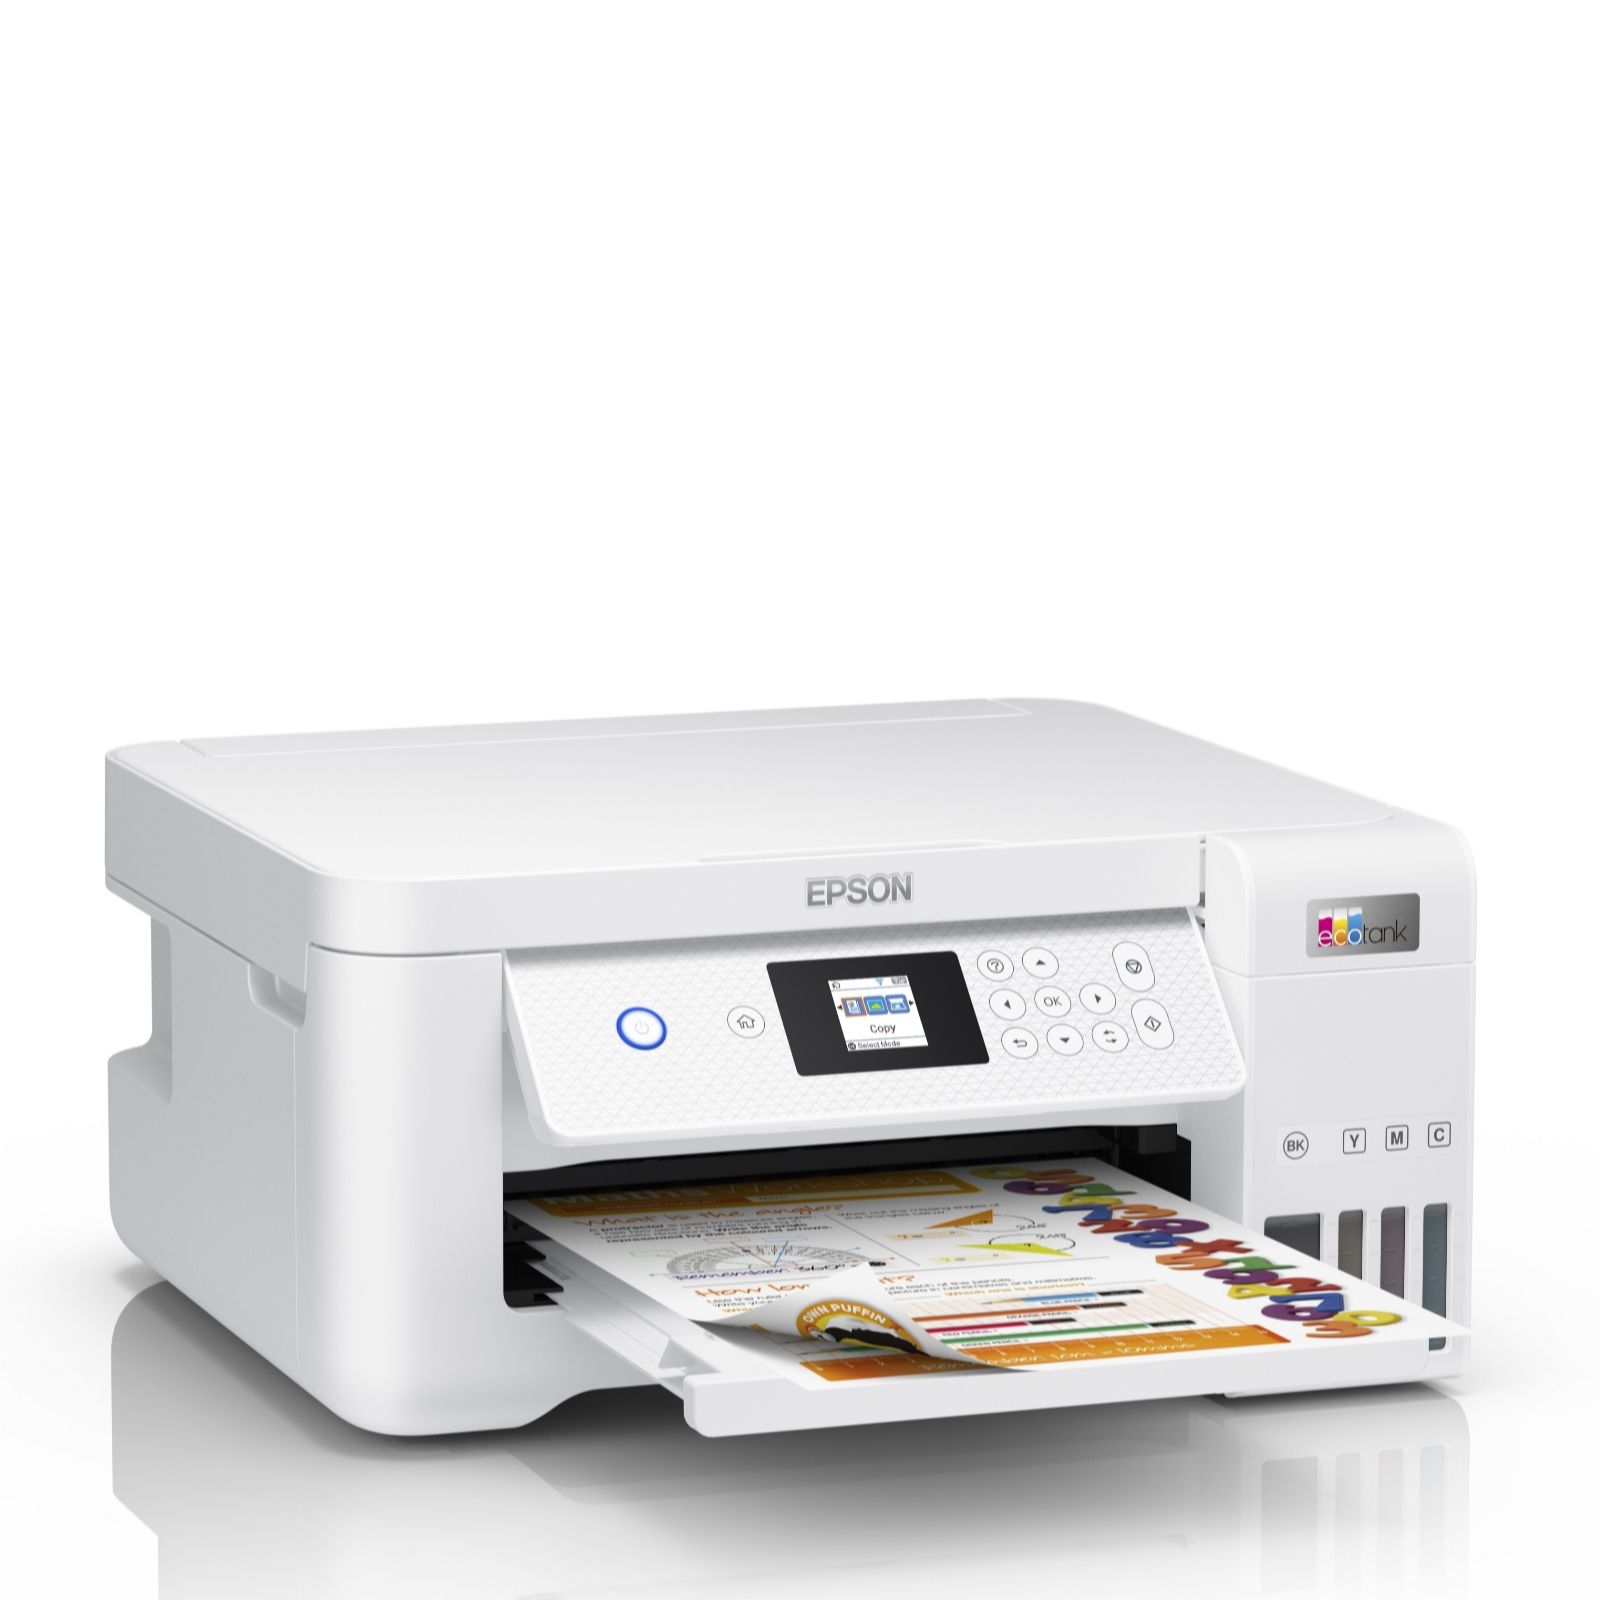 Epson ET-2856 printer manual [Free Download / PDF]